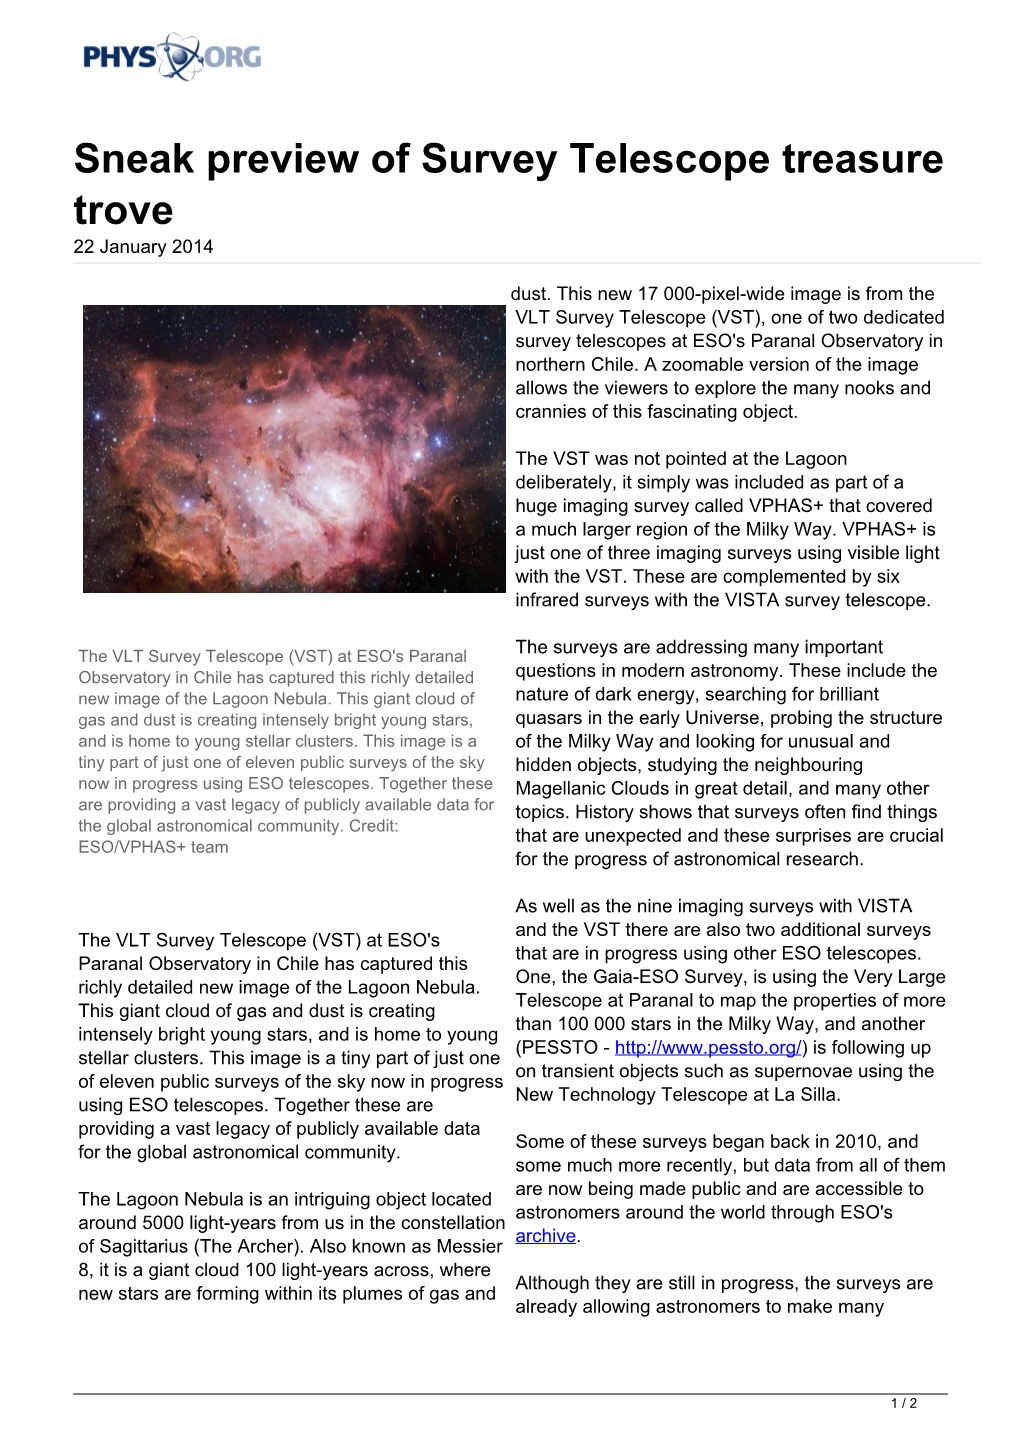 Sneak Preview of Survey Telescope Treasure Trove 22 January 2014